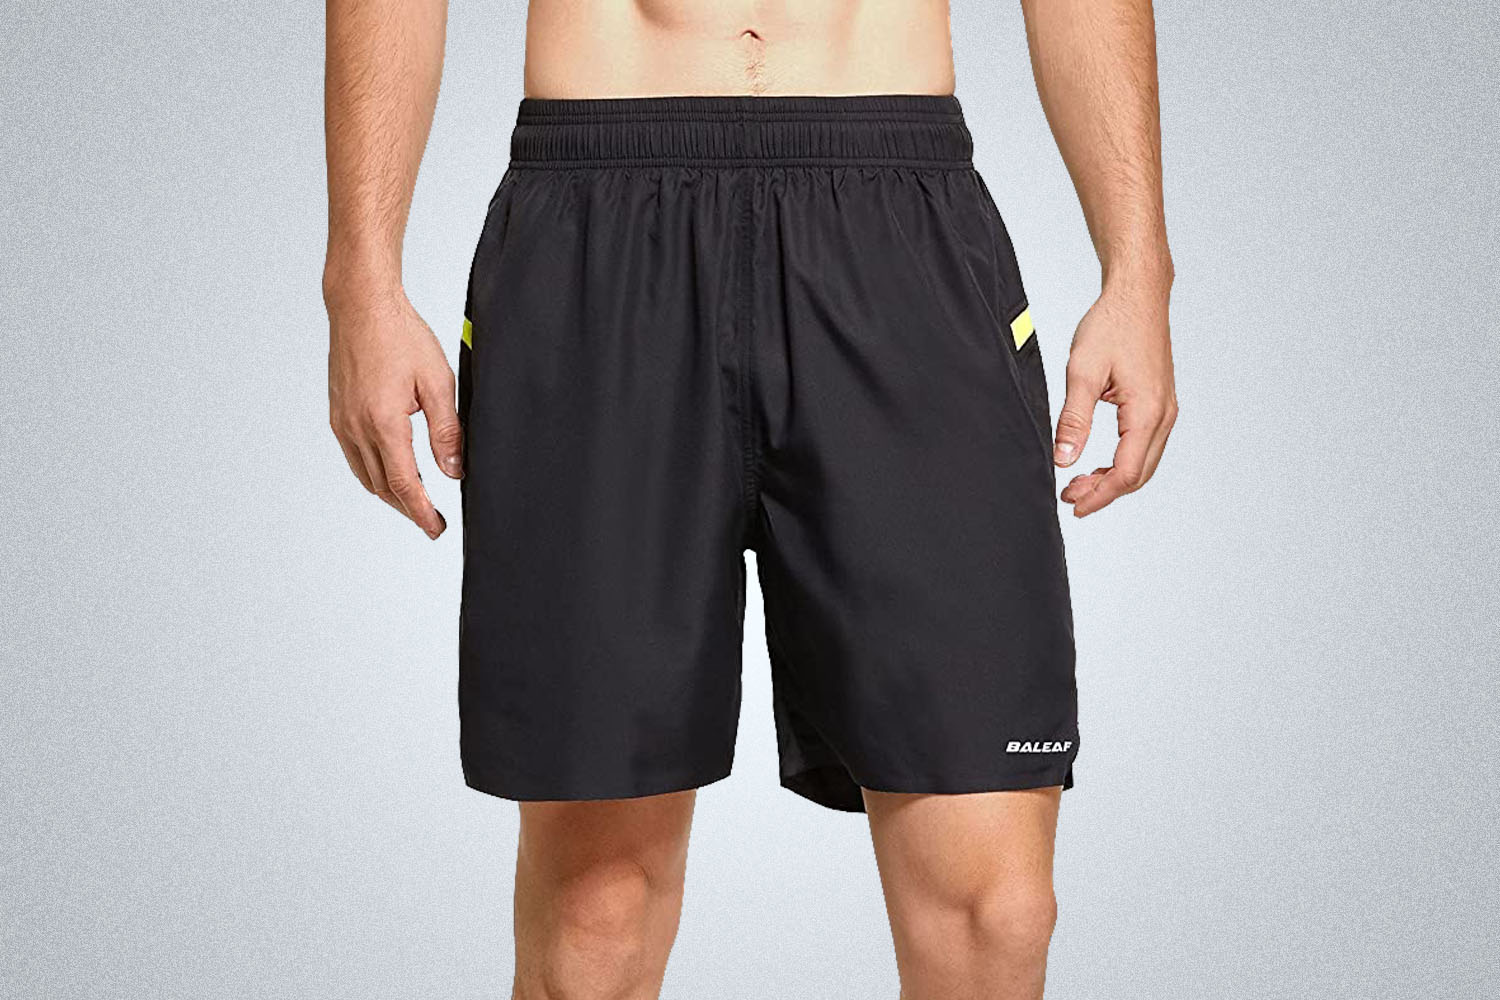 Men's Other BALEAF Men's Compression Running Workout Shorts With